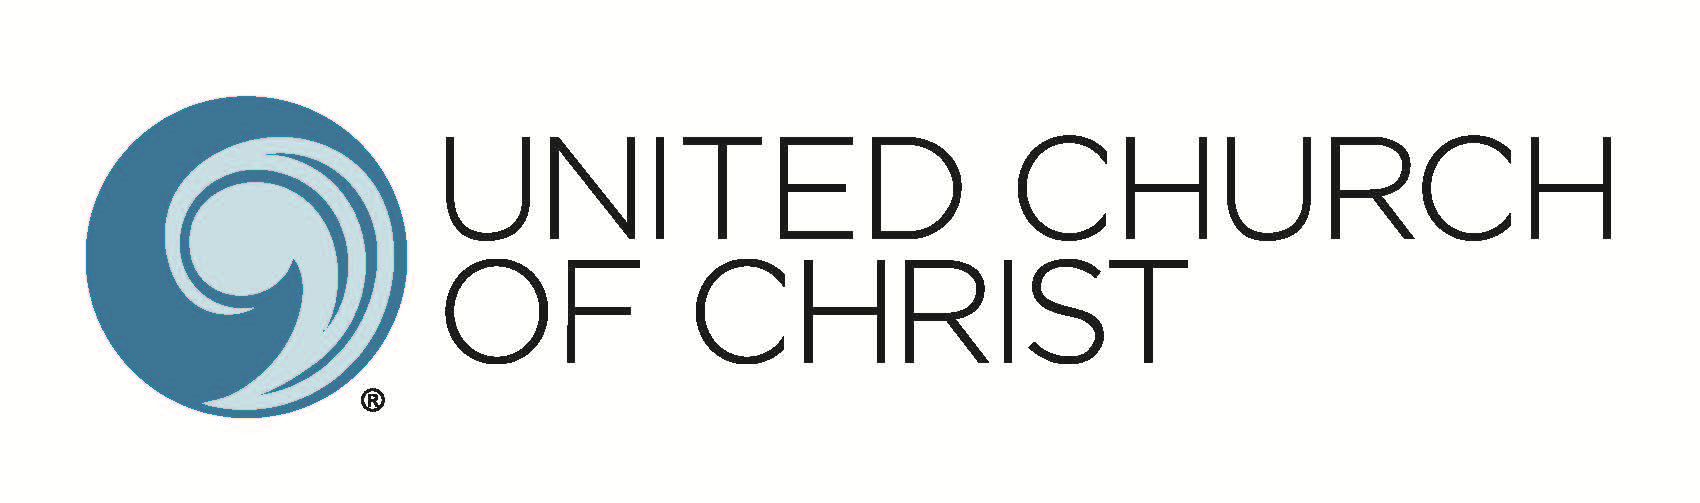 United Church of Christ, National Ministries logo